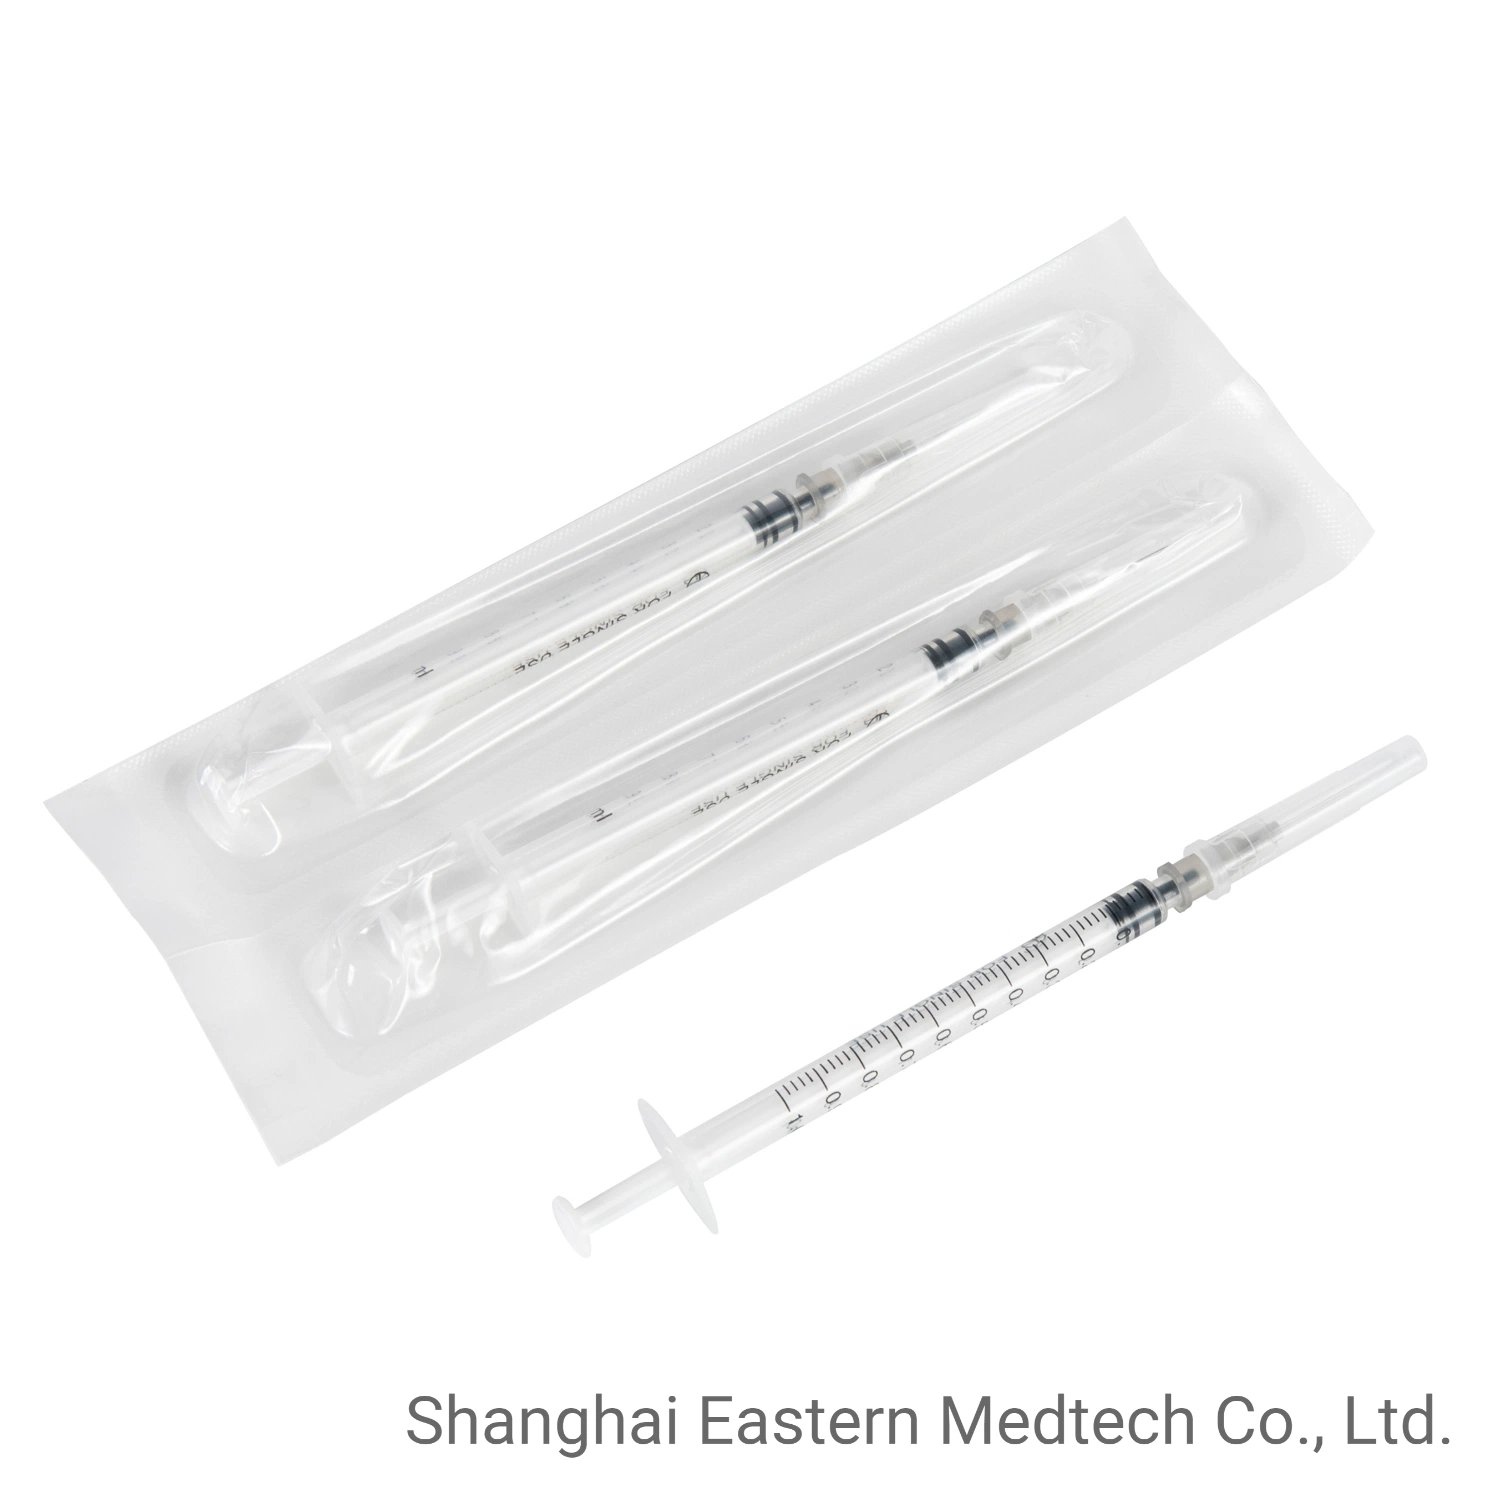 China Wholesale/Supplier Medical Supply Professional Syringe Manufacturer Low Dead Space Needle Mounted 1ml 3-Part Syringe Vaccine Syringe